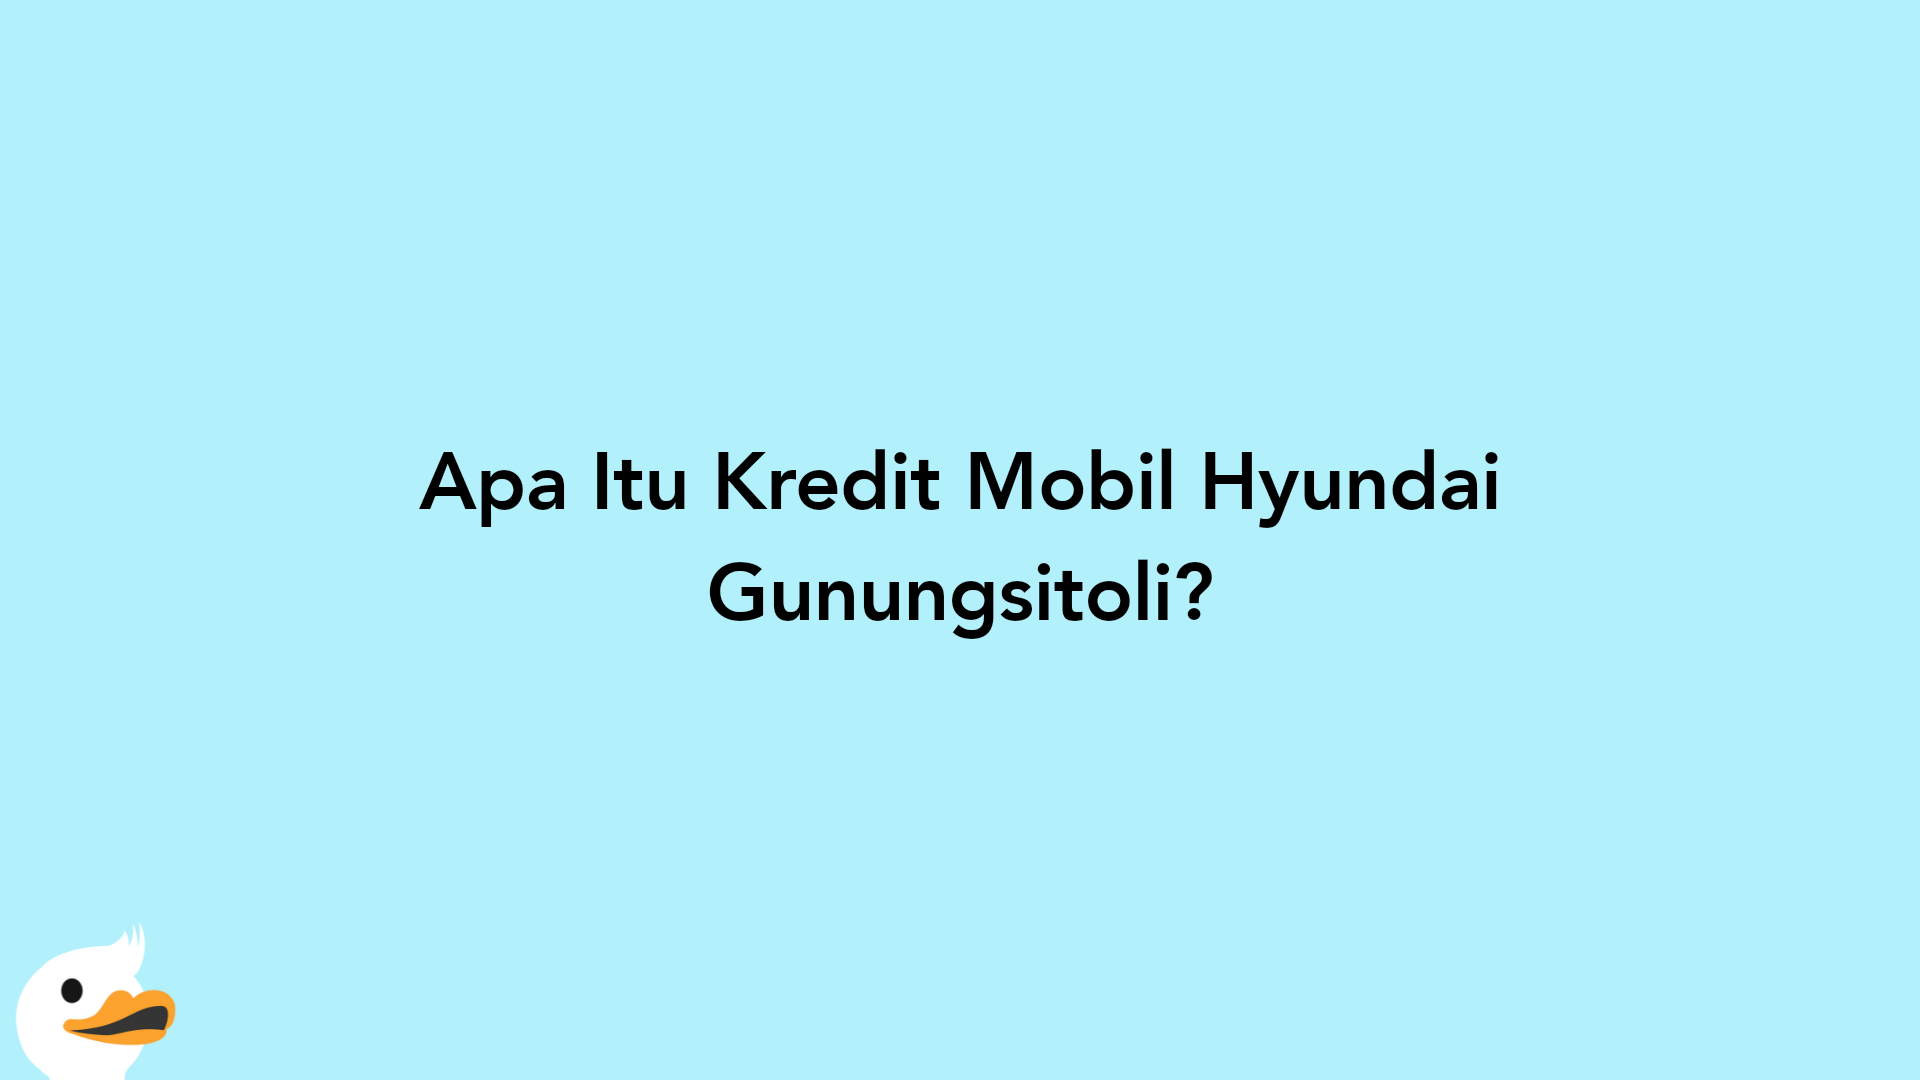 Apa Itu Kredit Mobil Hyundai Gunungsitoli?